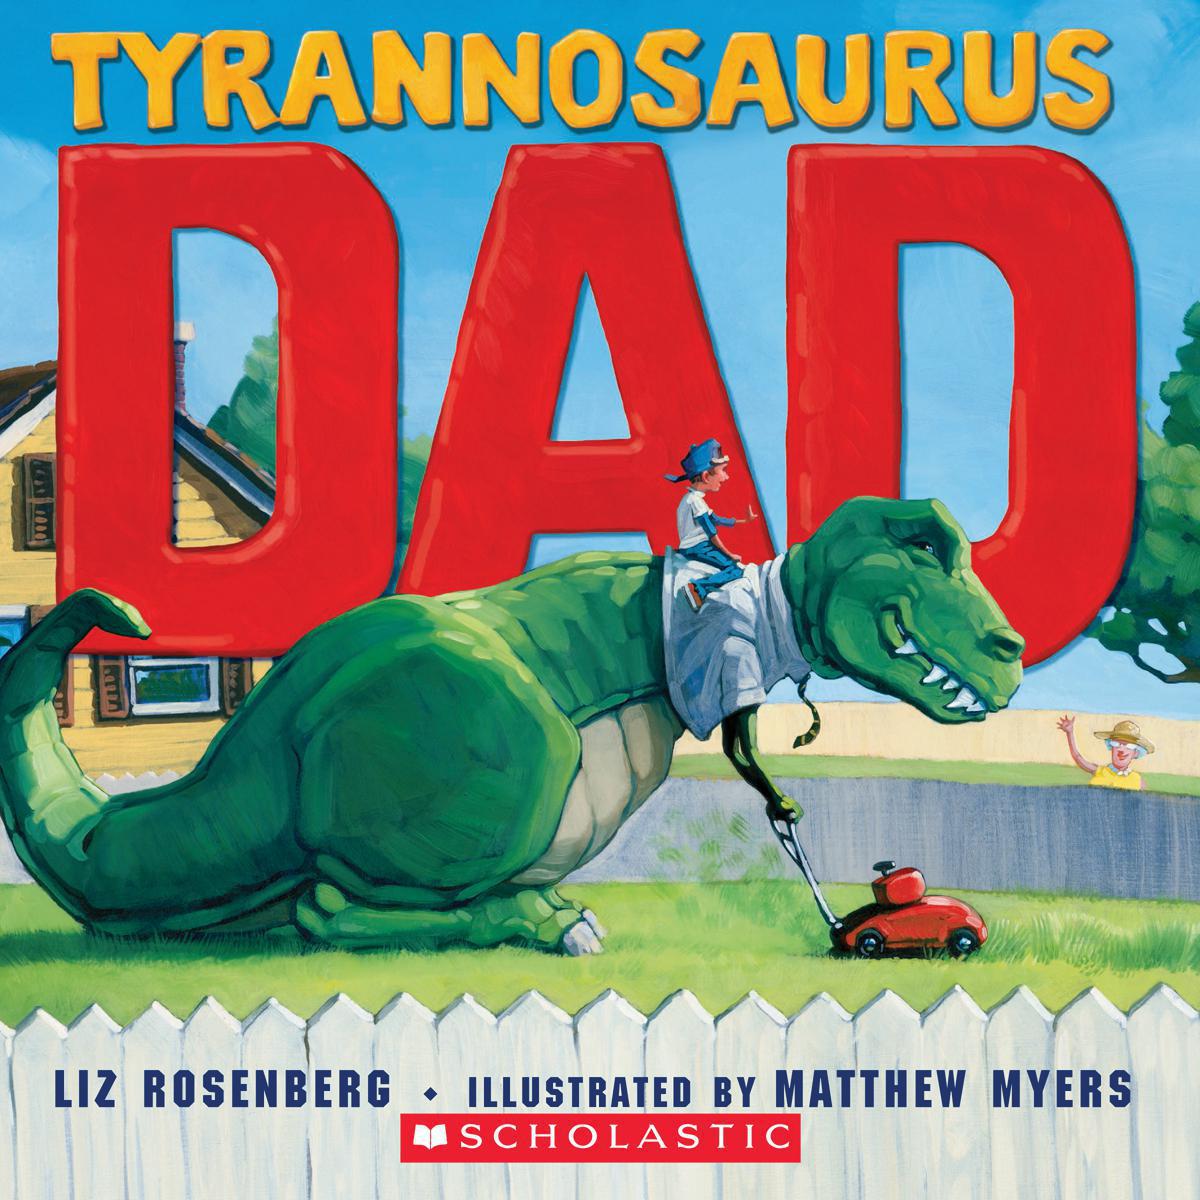  Tyrannosaurus Dad 